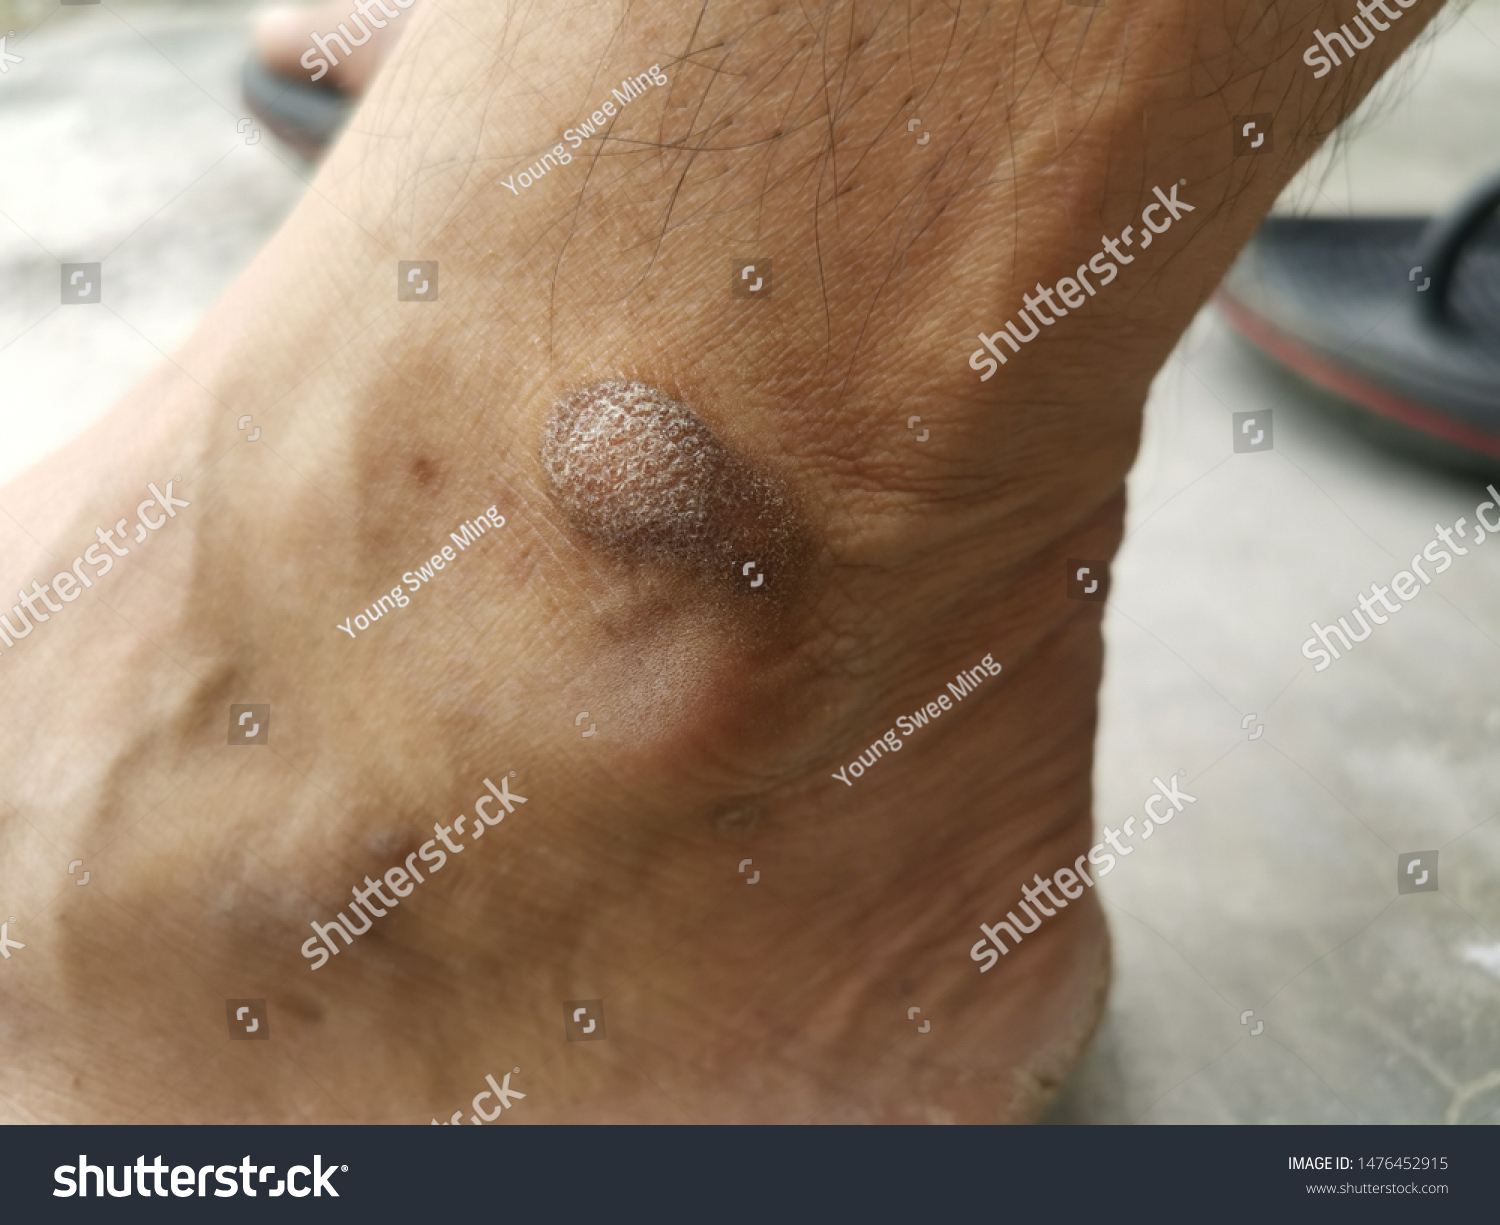 rough skin on foot